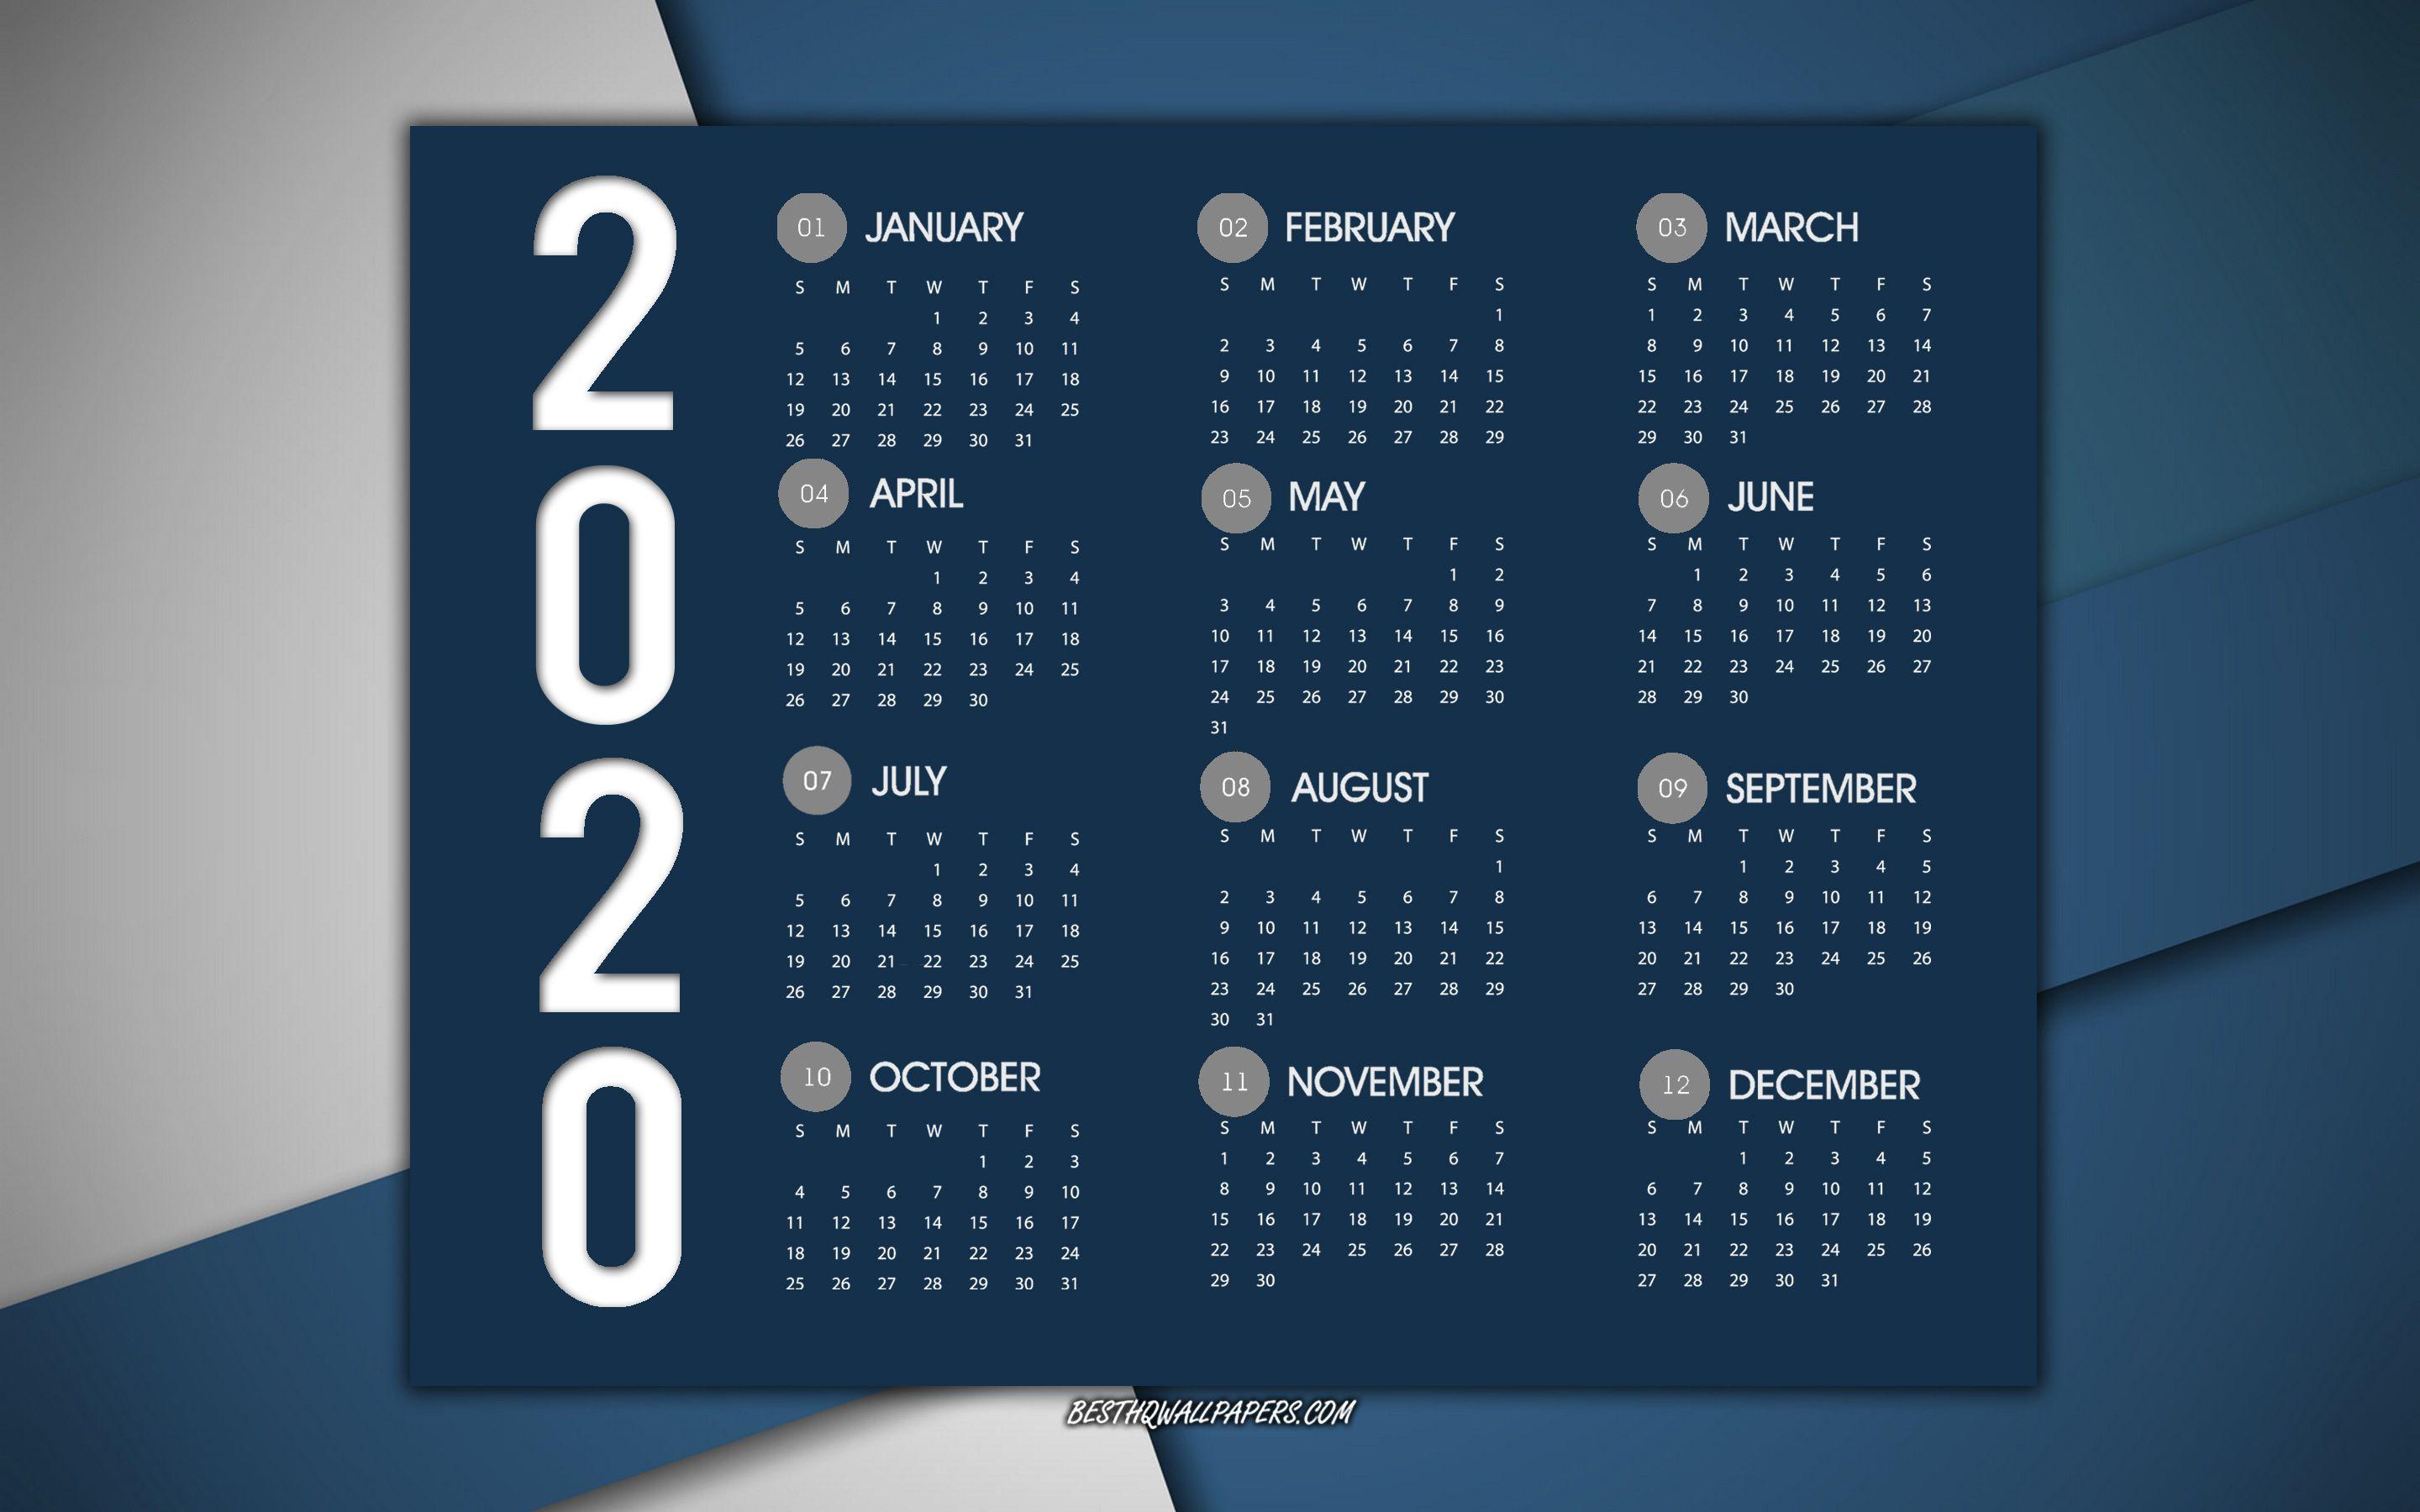 November 2020 Calendar Wallpaper Free November 2020